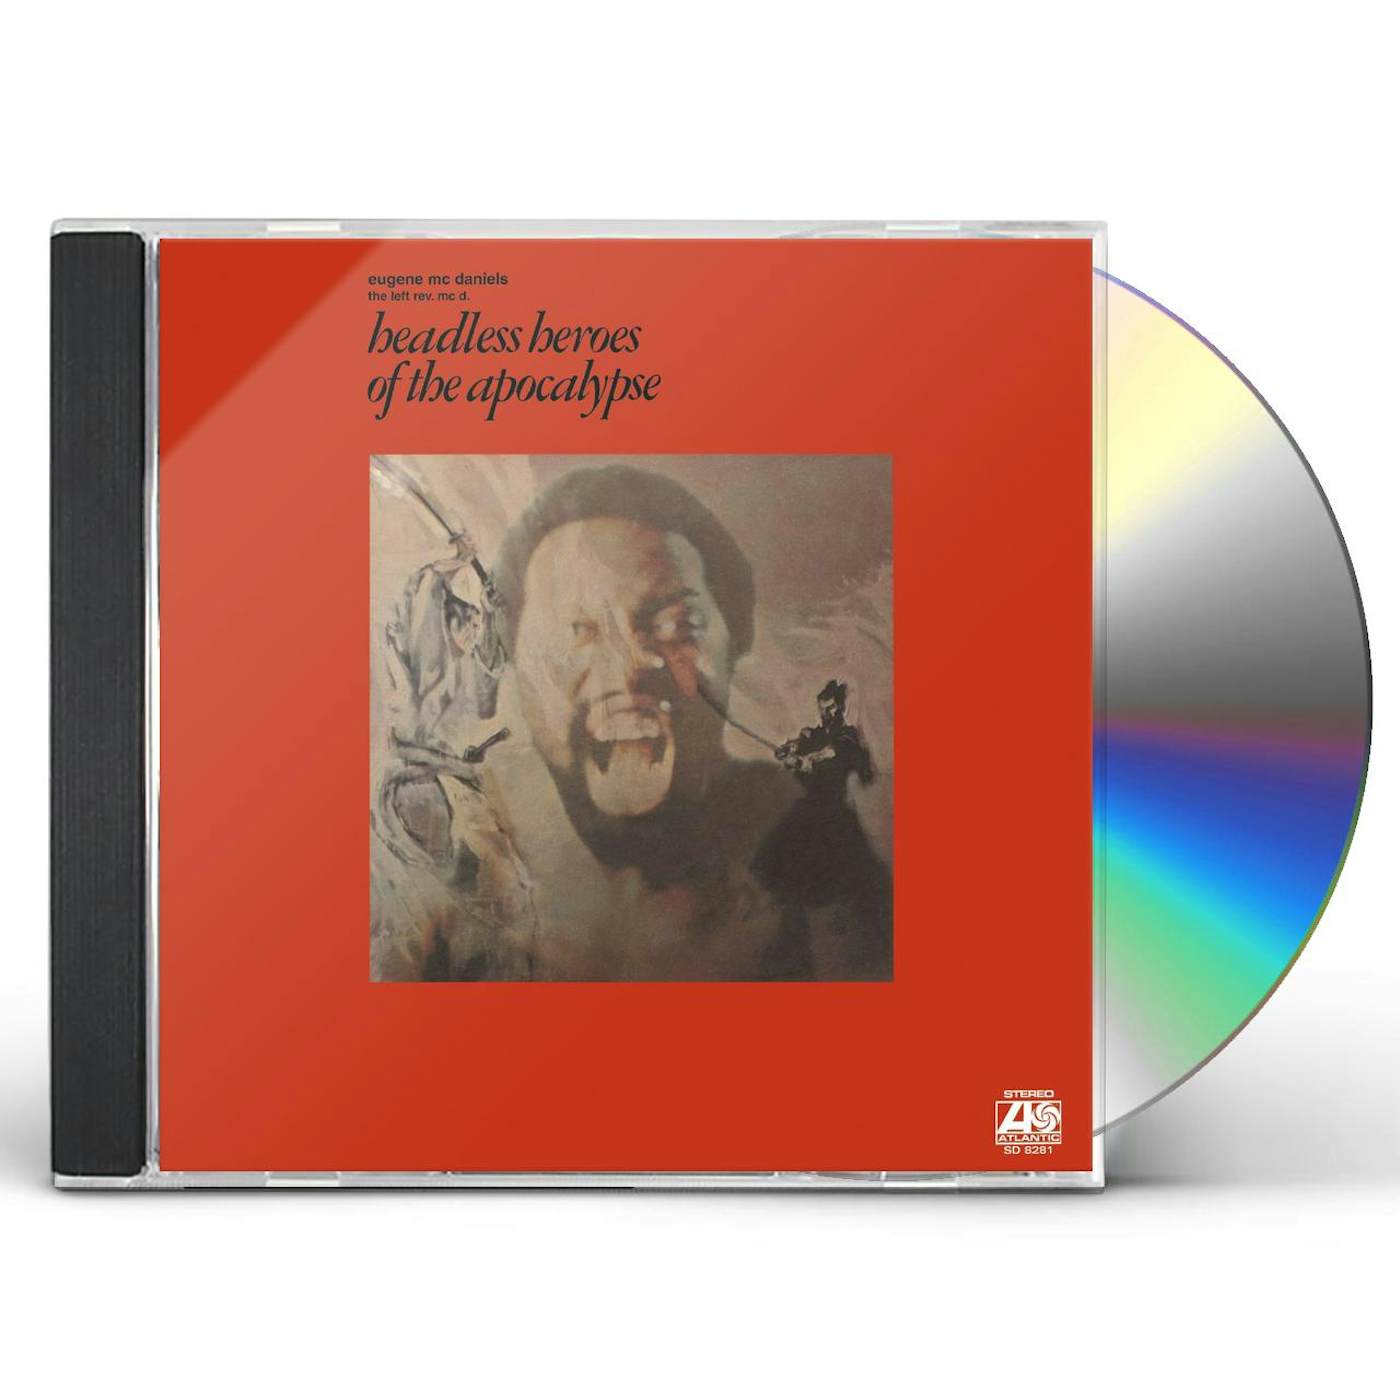 Eugene McDaniels HEADLESS HEROES OF THE APOCALYPSE CD